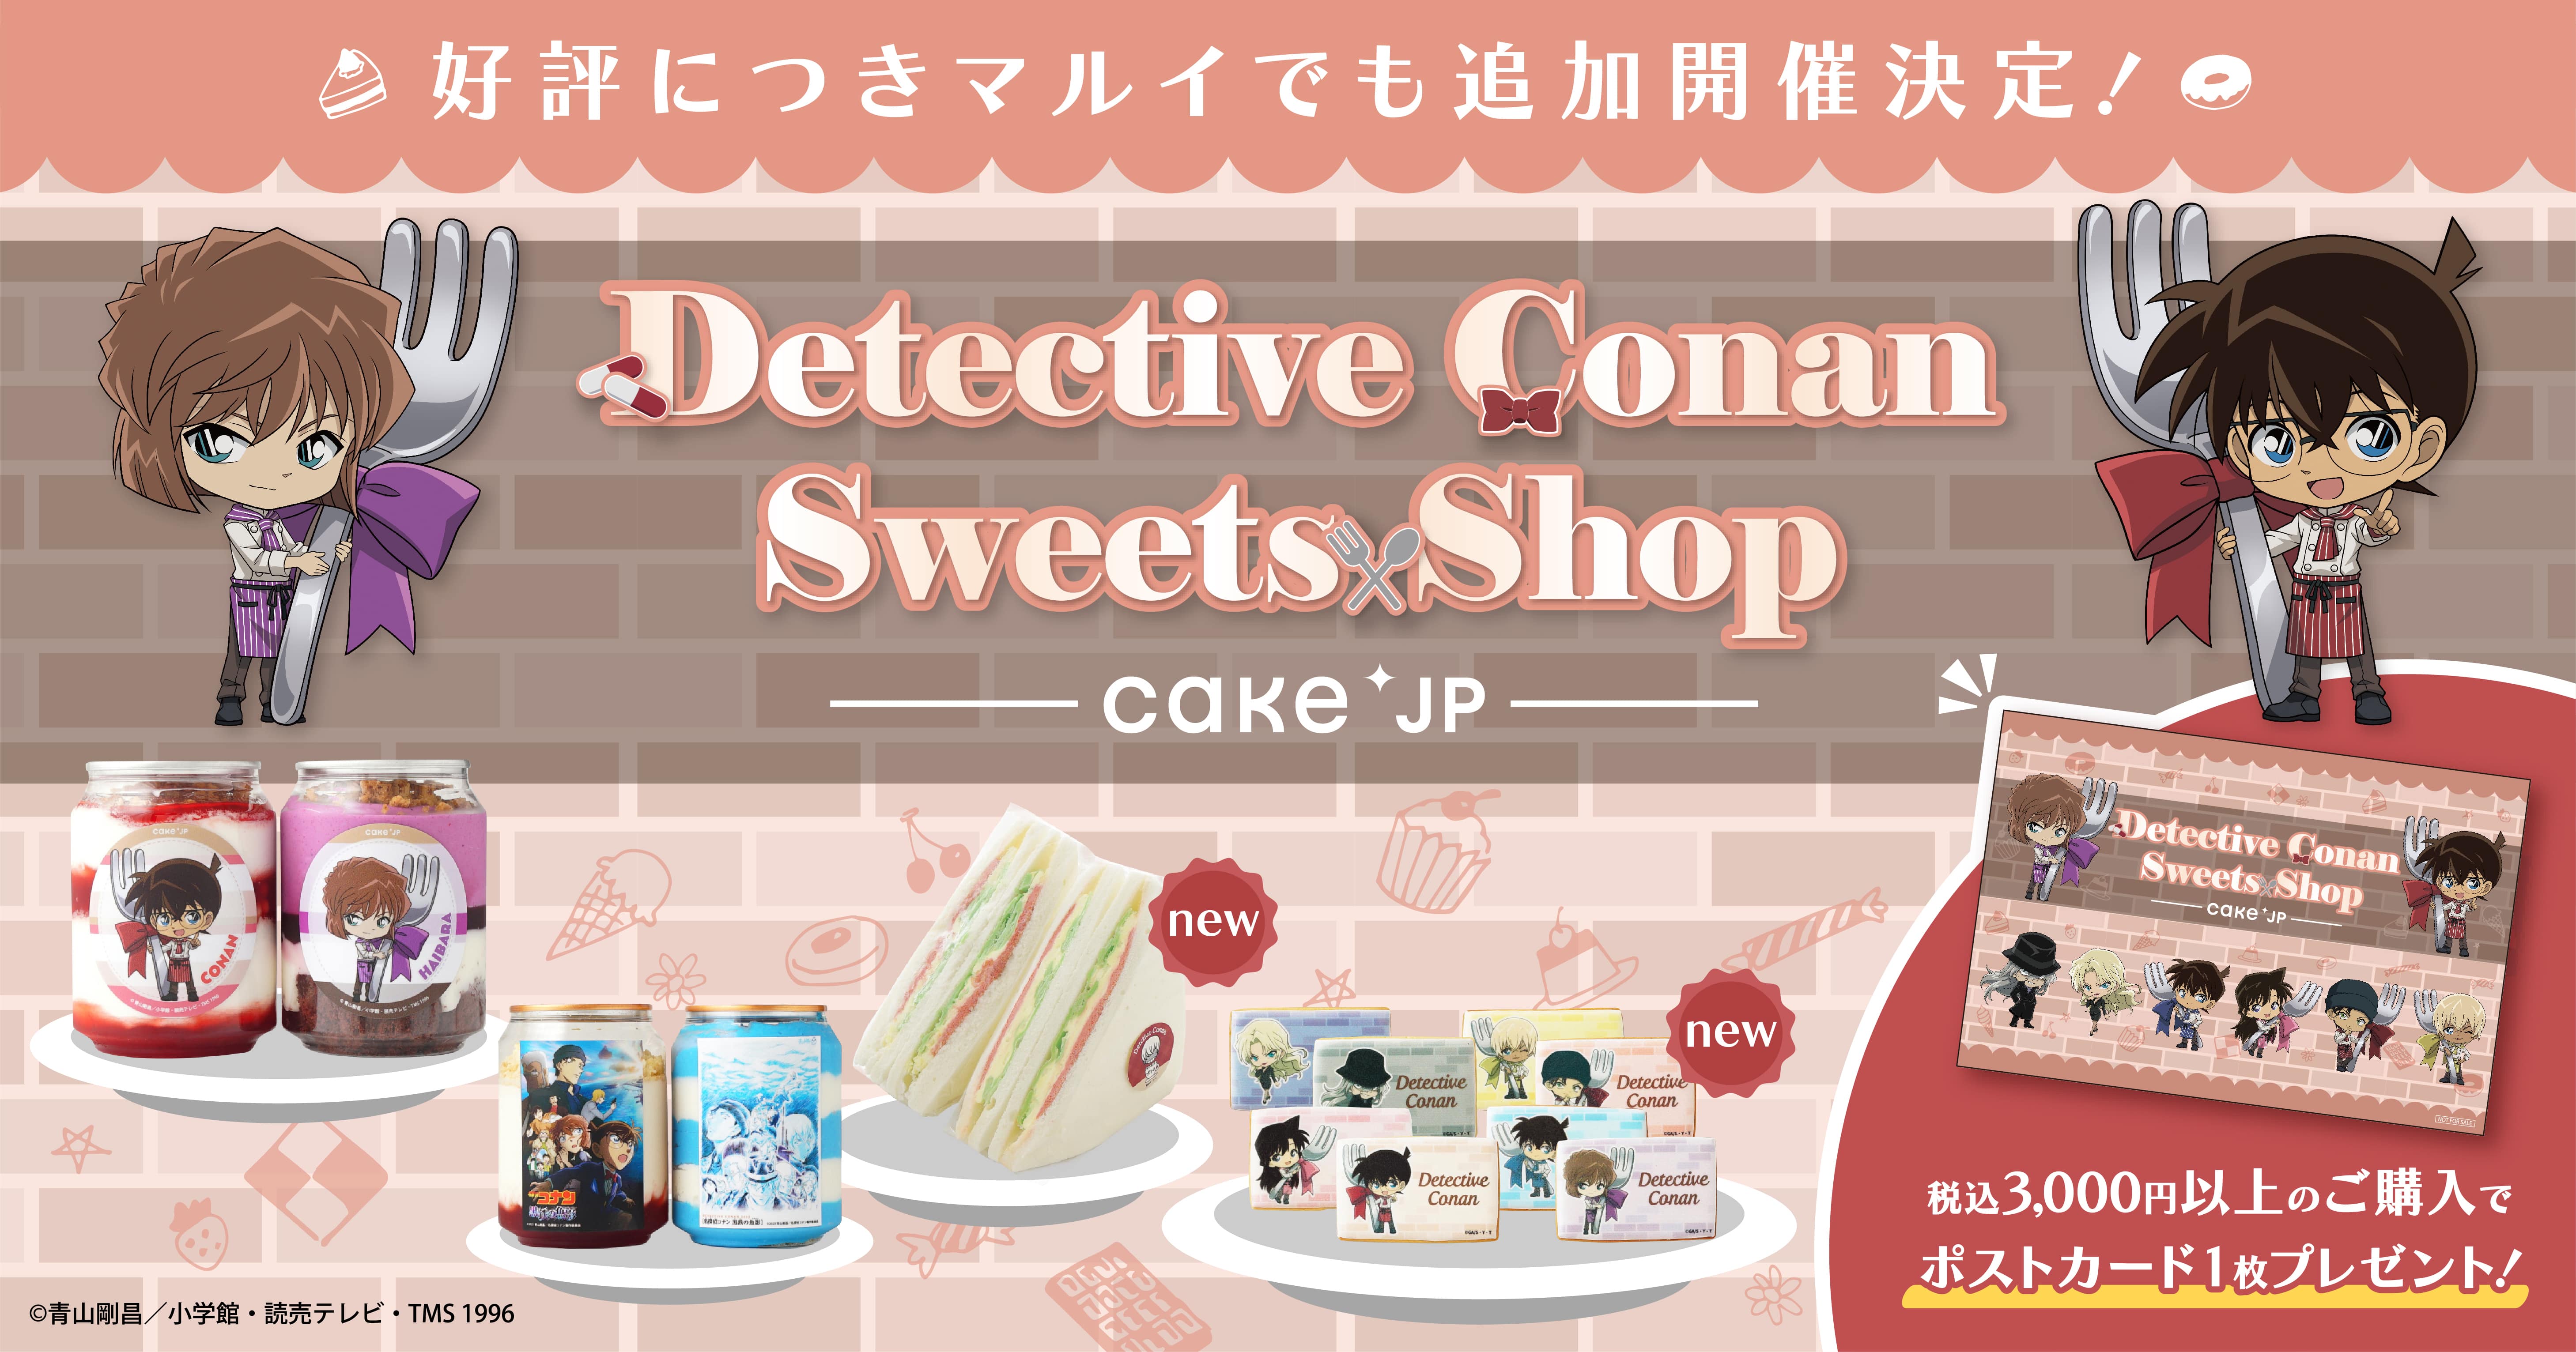 Detective Conan Sweets Shop IN OIOI